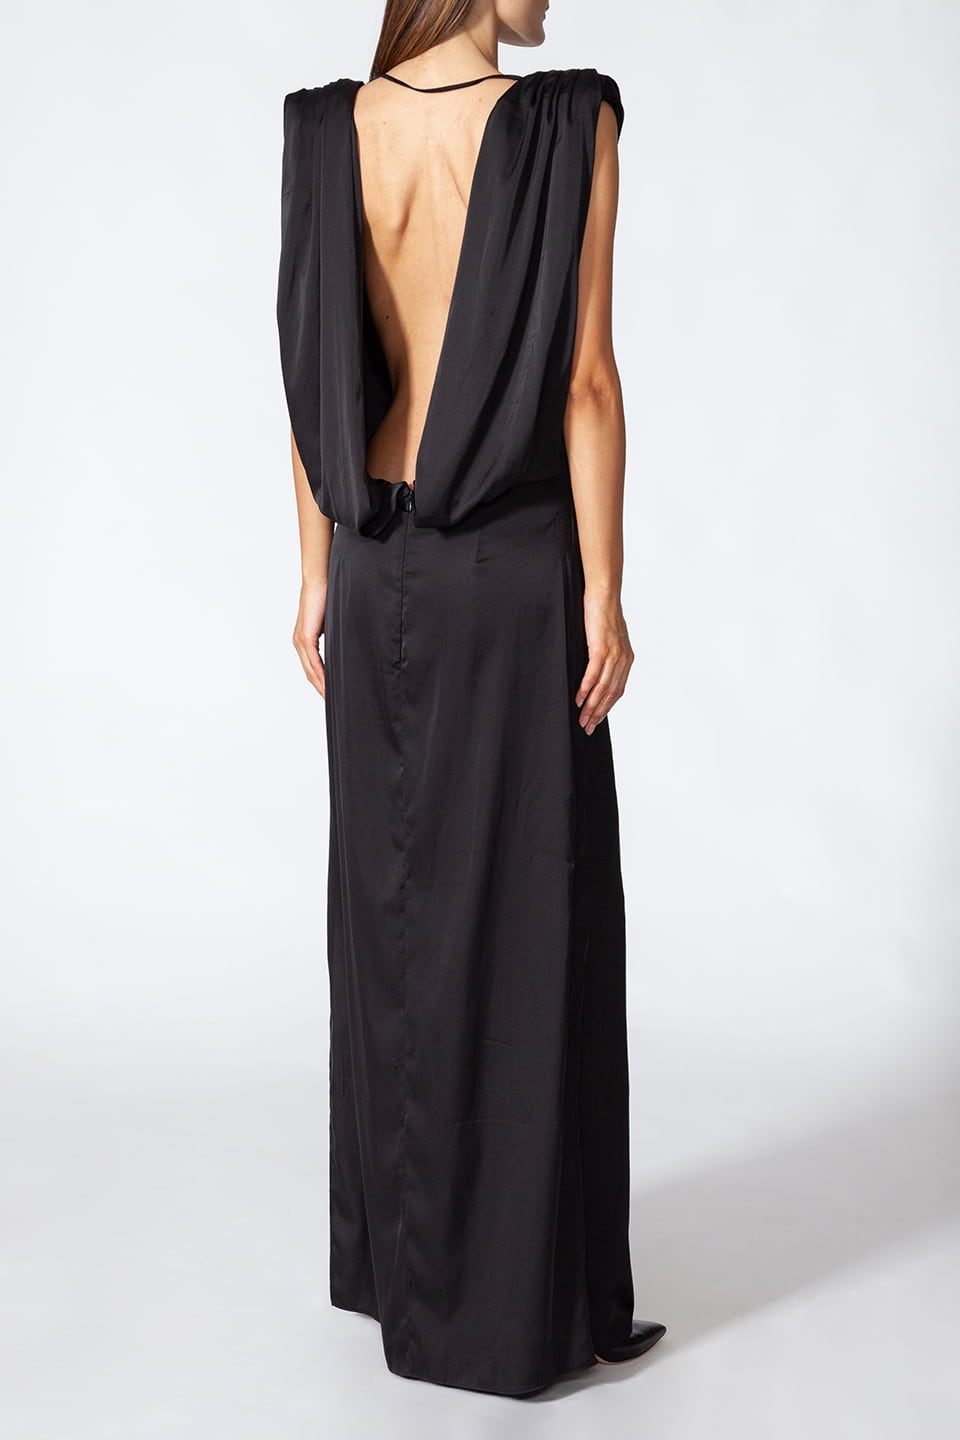 Shop online black maxi dress from fashion designer